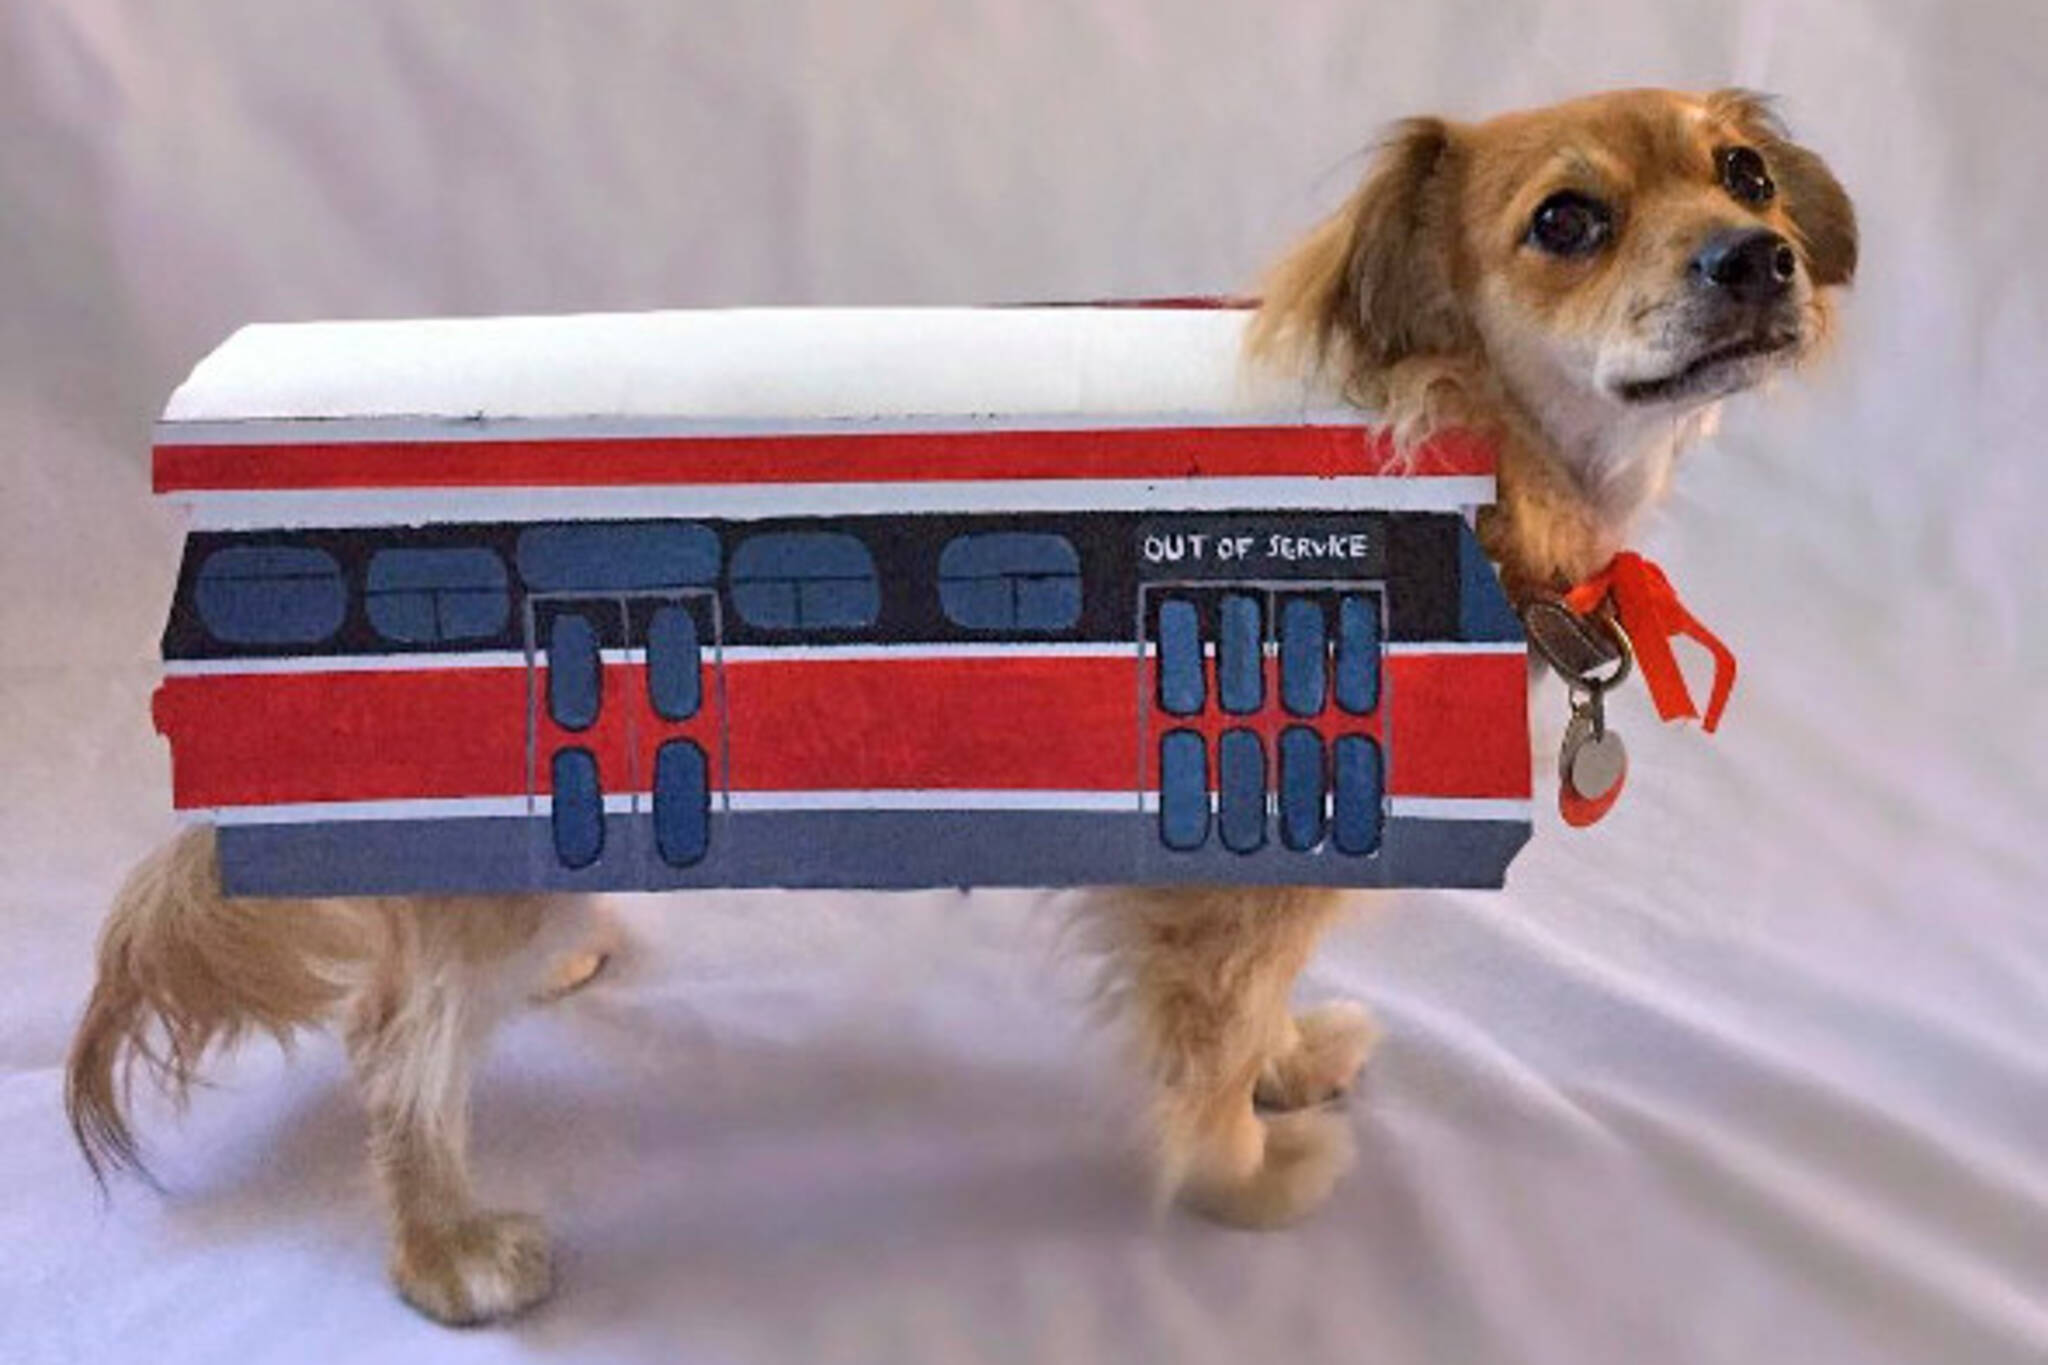 ttc streetcar dog